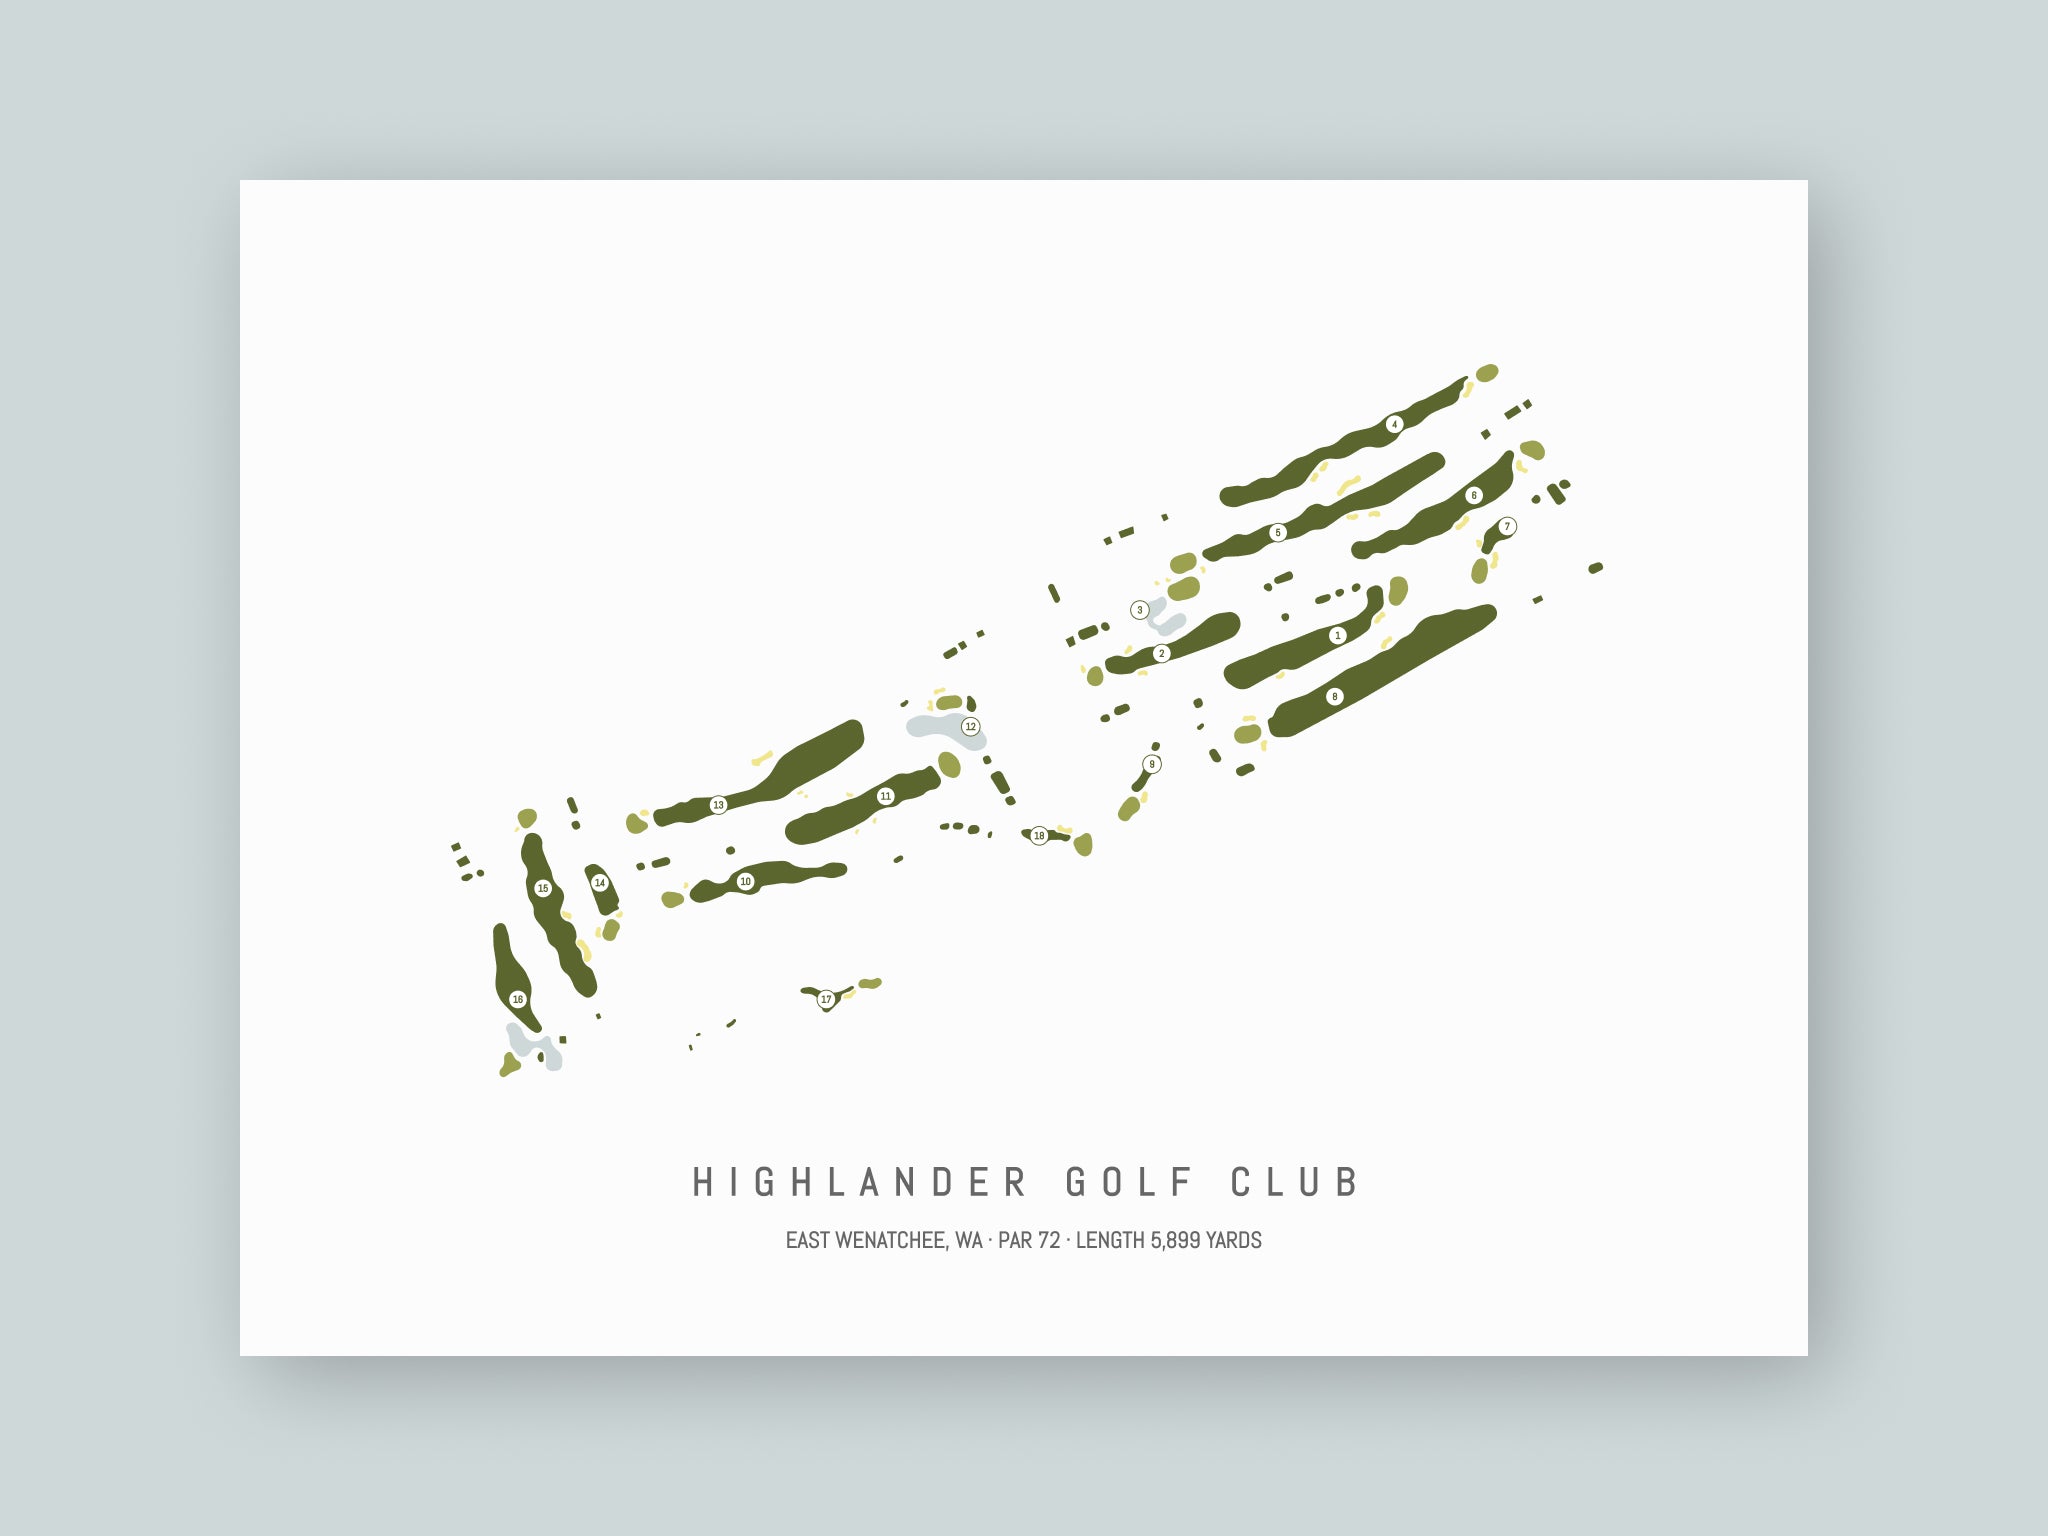 Highlander-Golf-Club-WA--Unframed-24x18-With-Hole-Numbers